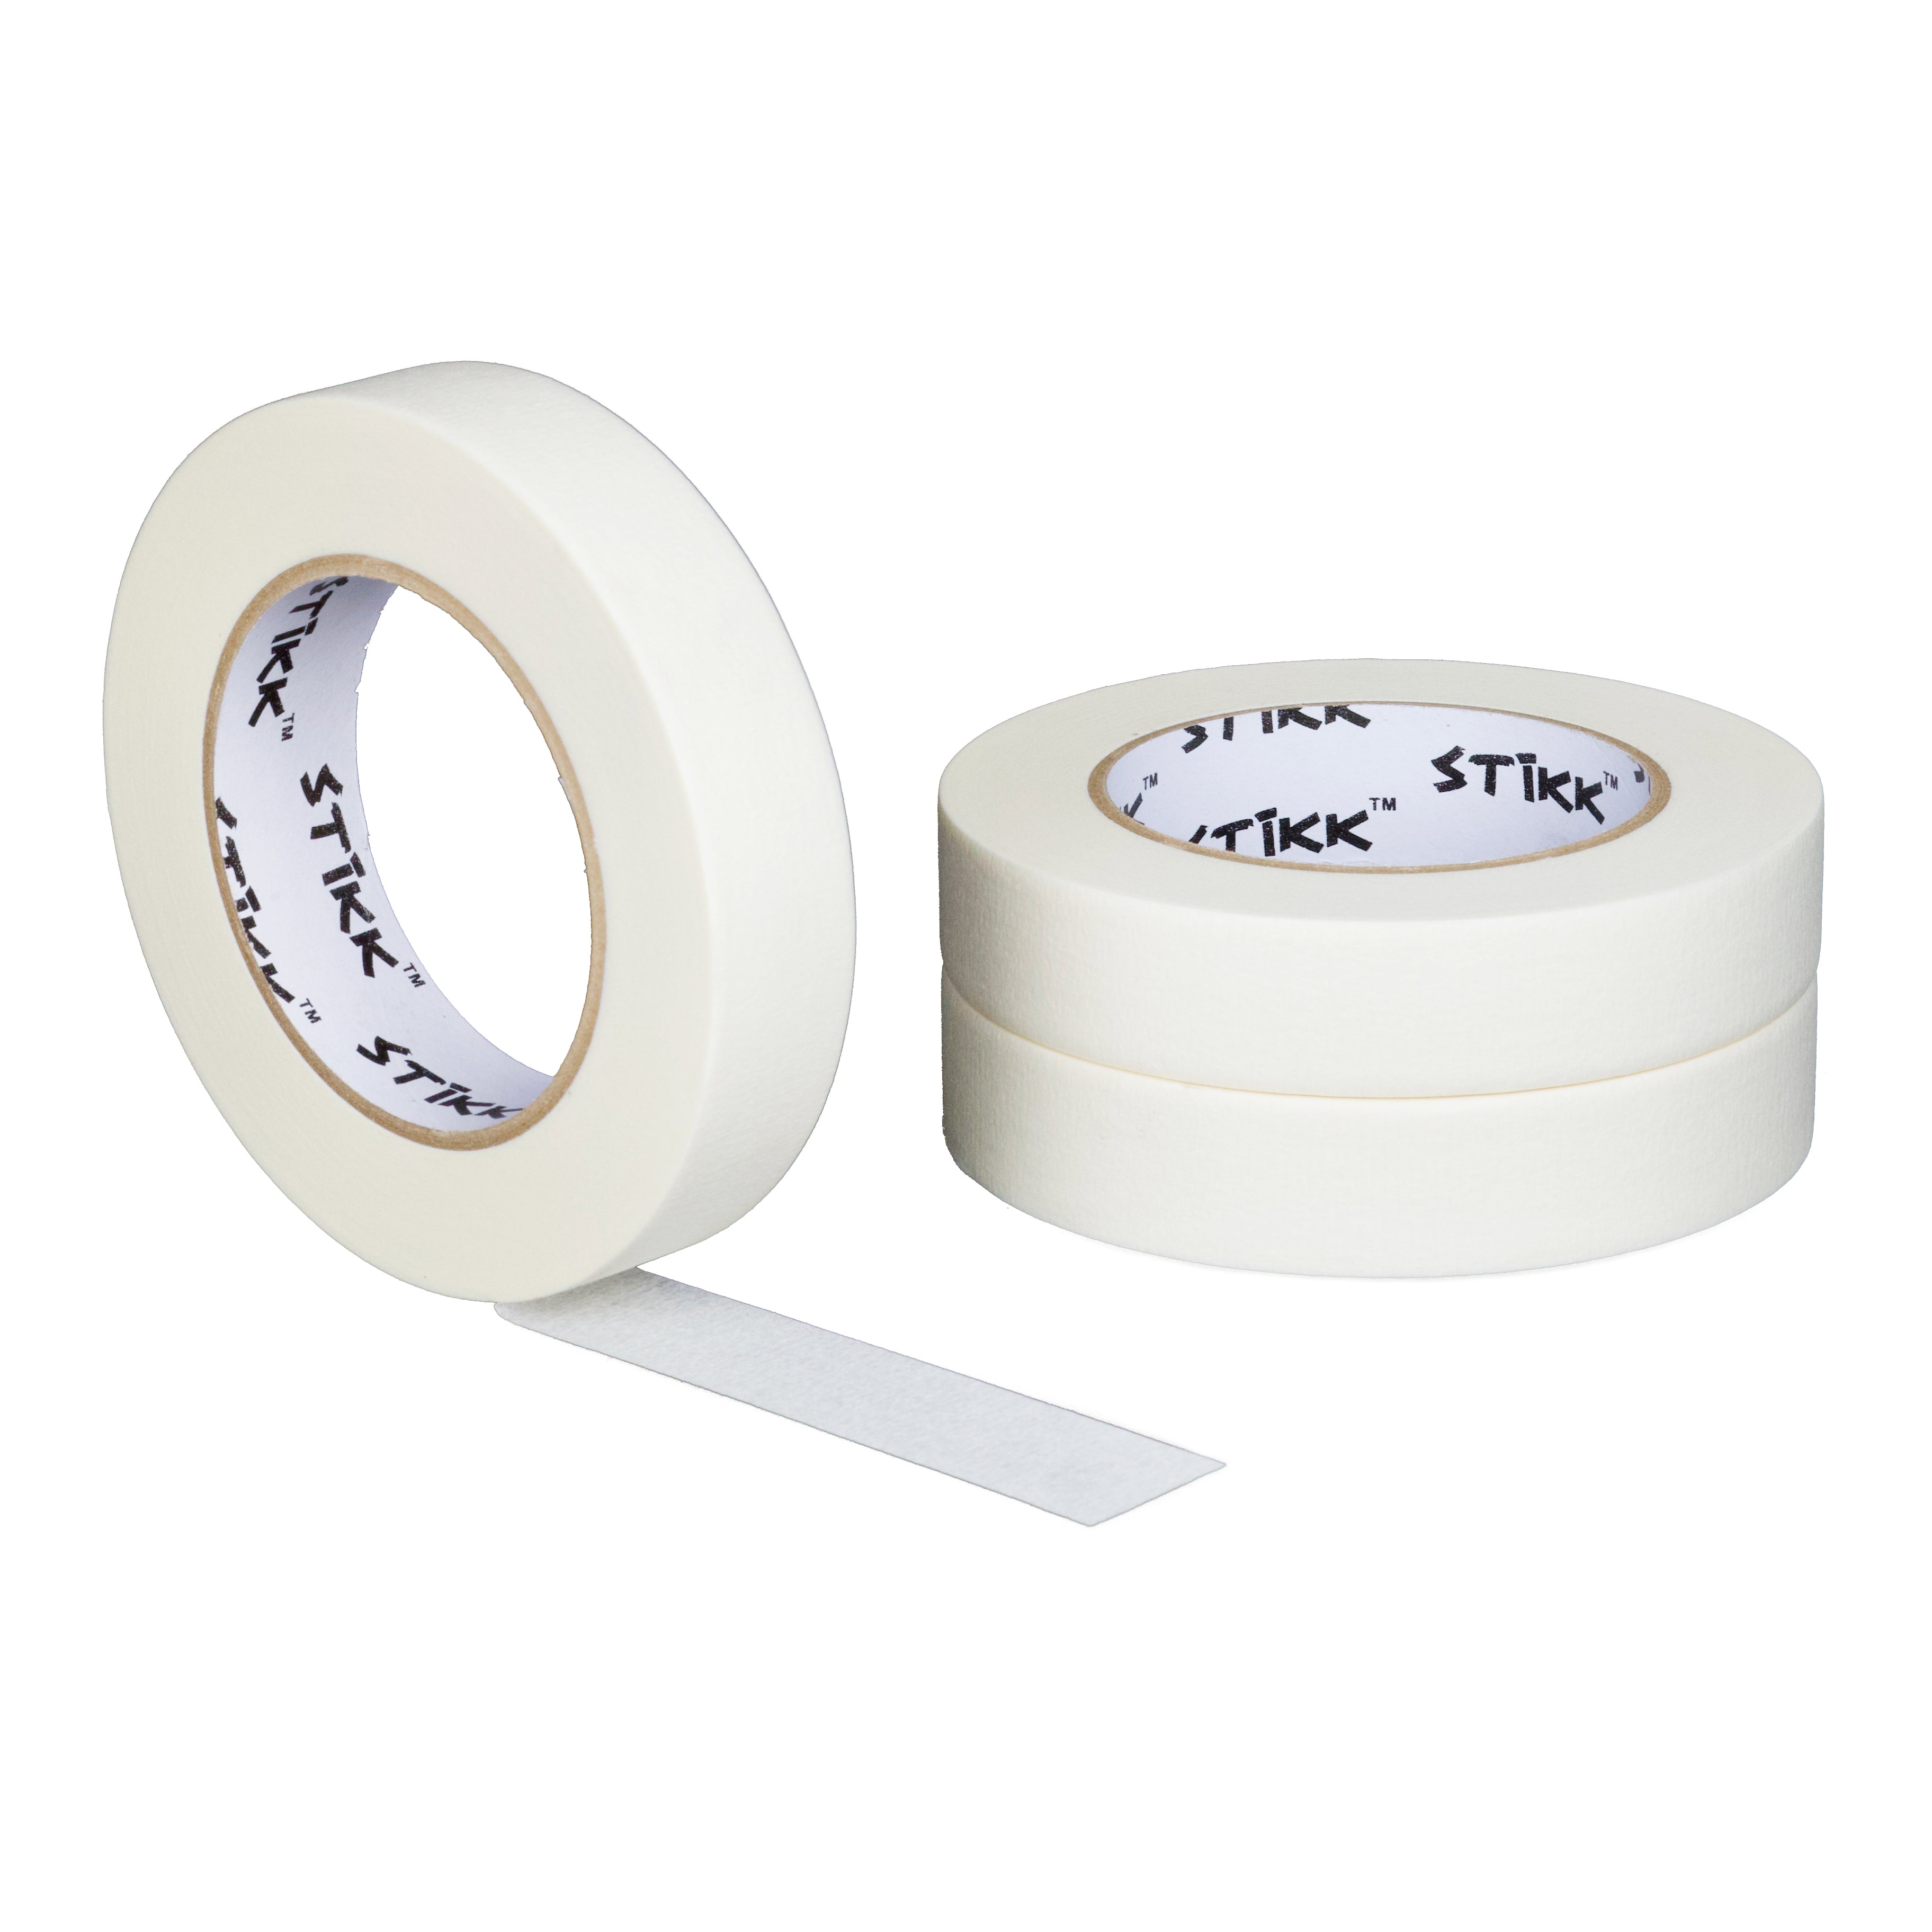 Stikk Painters Tape - 10pk Yellow Painter Tape - 1 inch x 60 Yards - Paint Tape for Painting, Edges, Trim, Ceilings - Masking Tape for DIY Paint